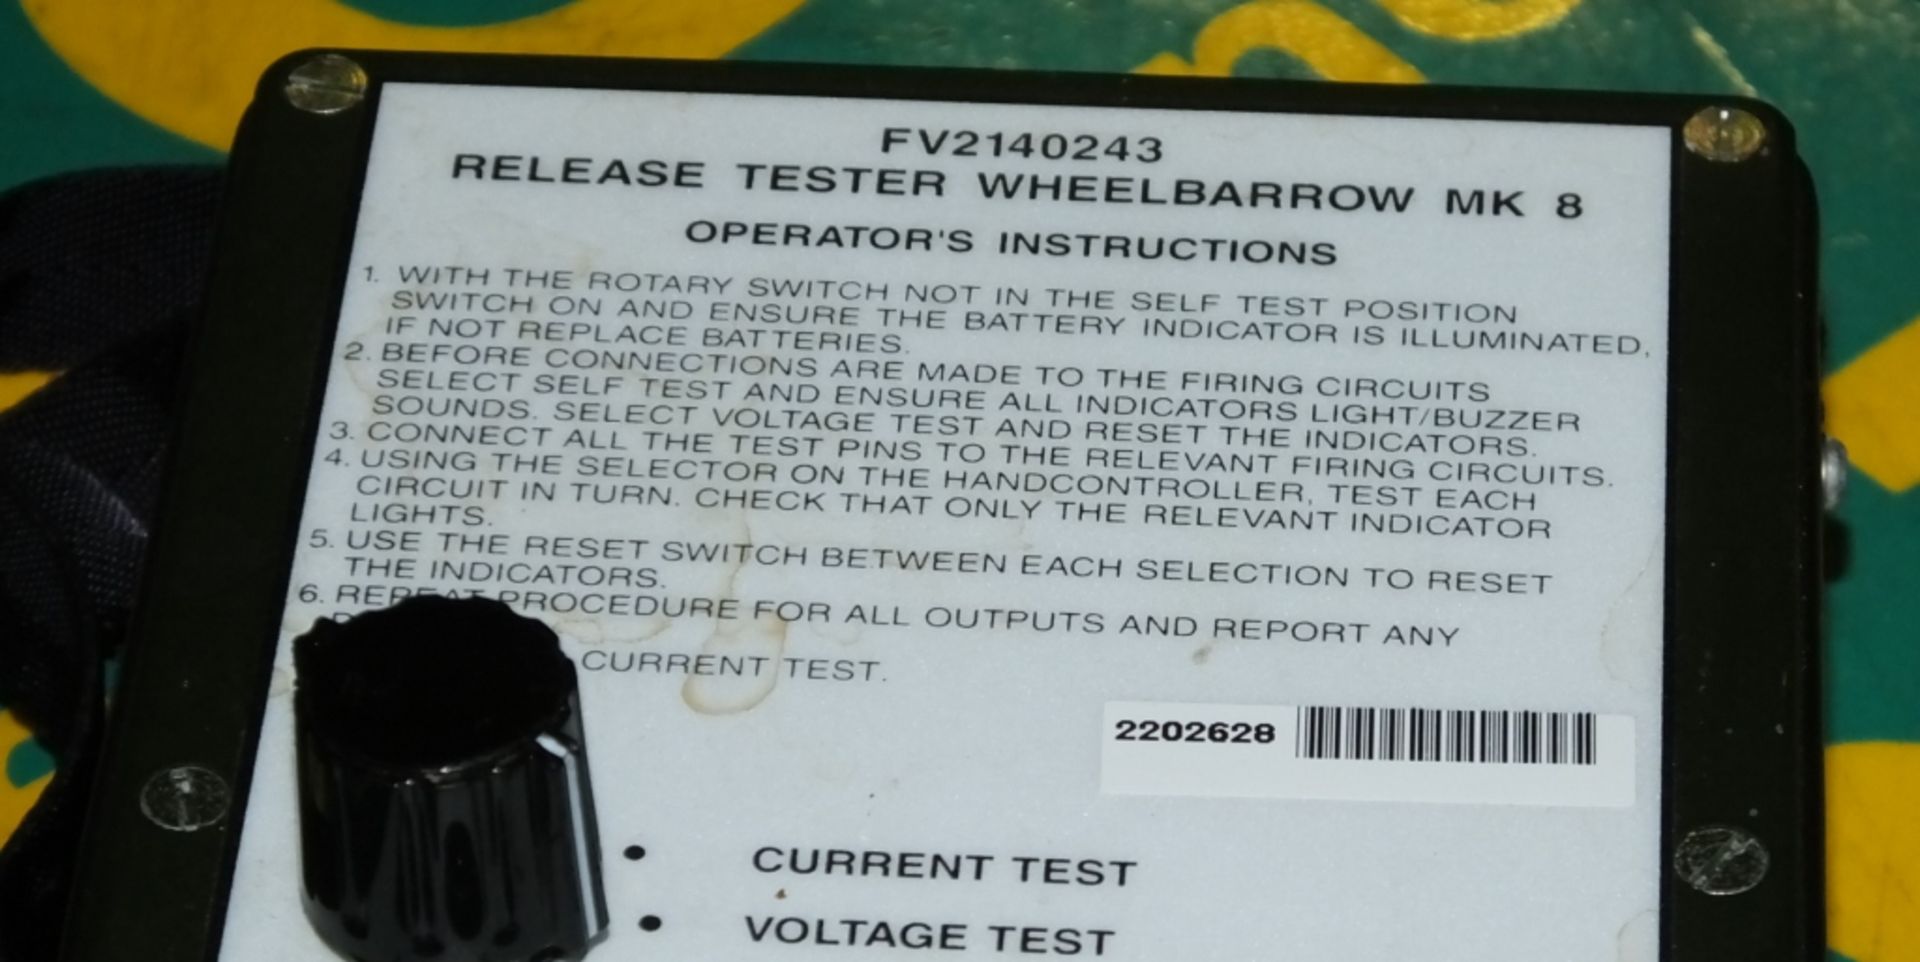 Release Tester Wheelbarrow MK8 - FV2140243 - Image 2 of 2